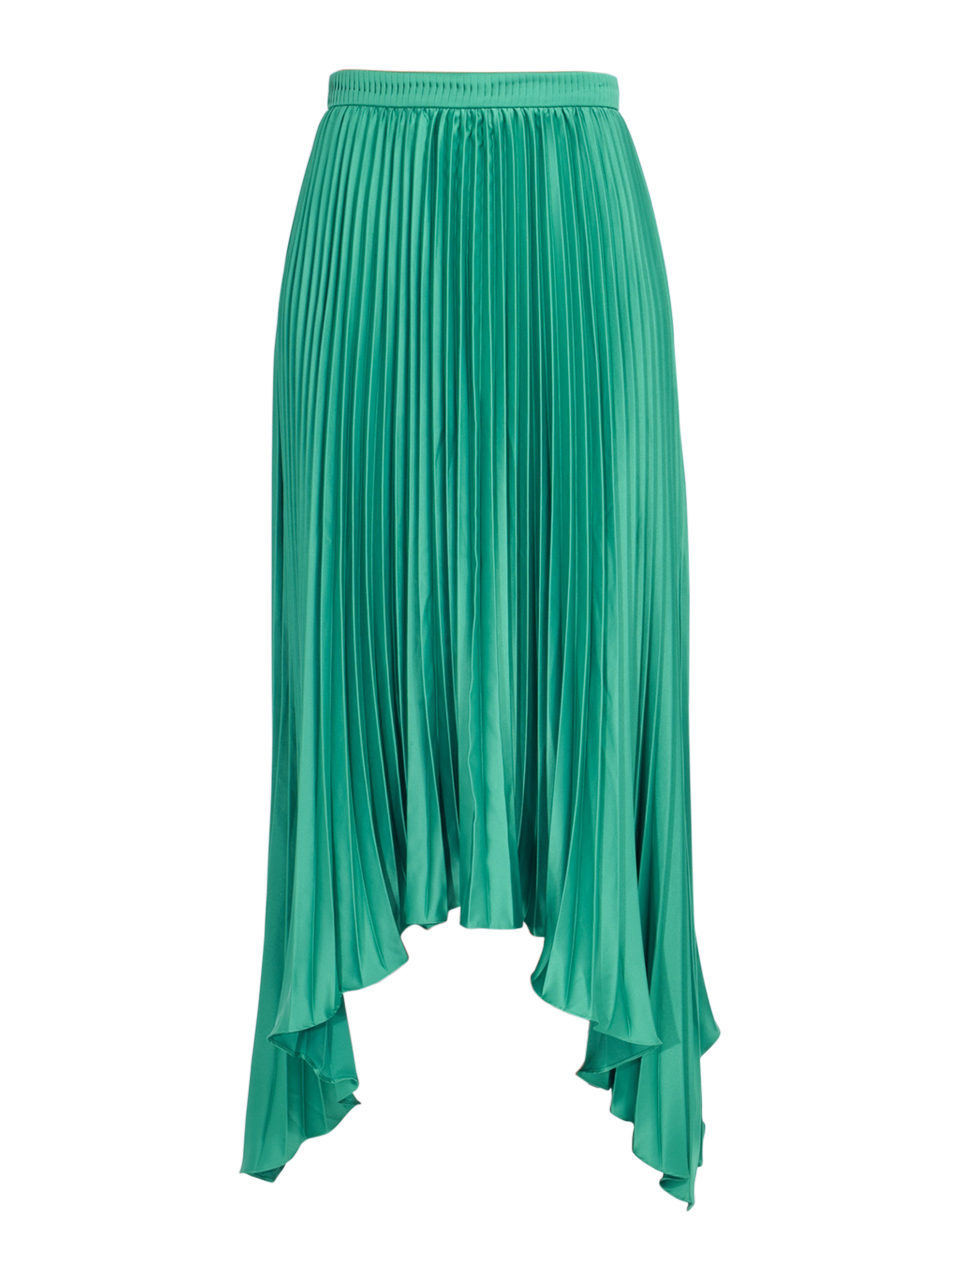 AMUR Olly Olana Pleated Midi Skirt in Green Product Shot 